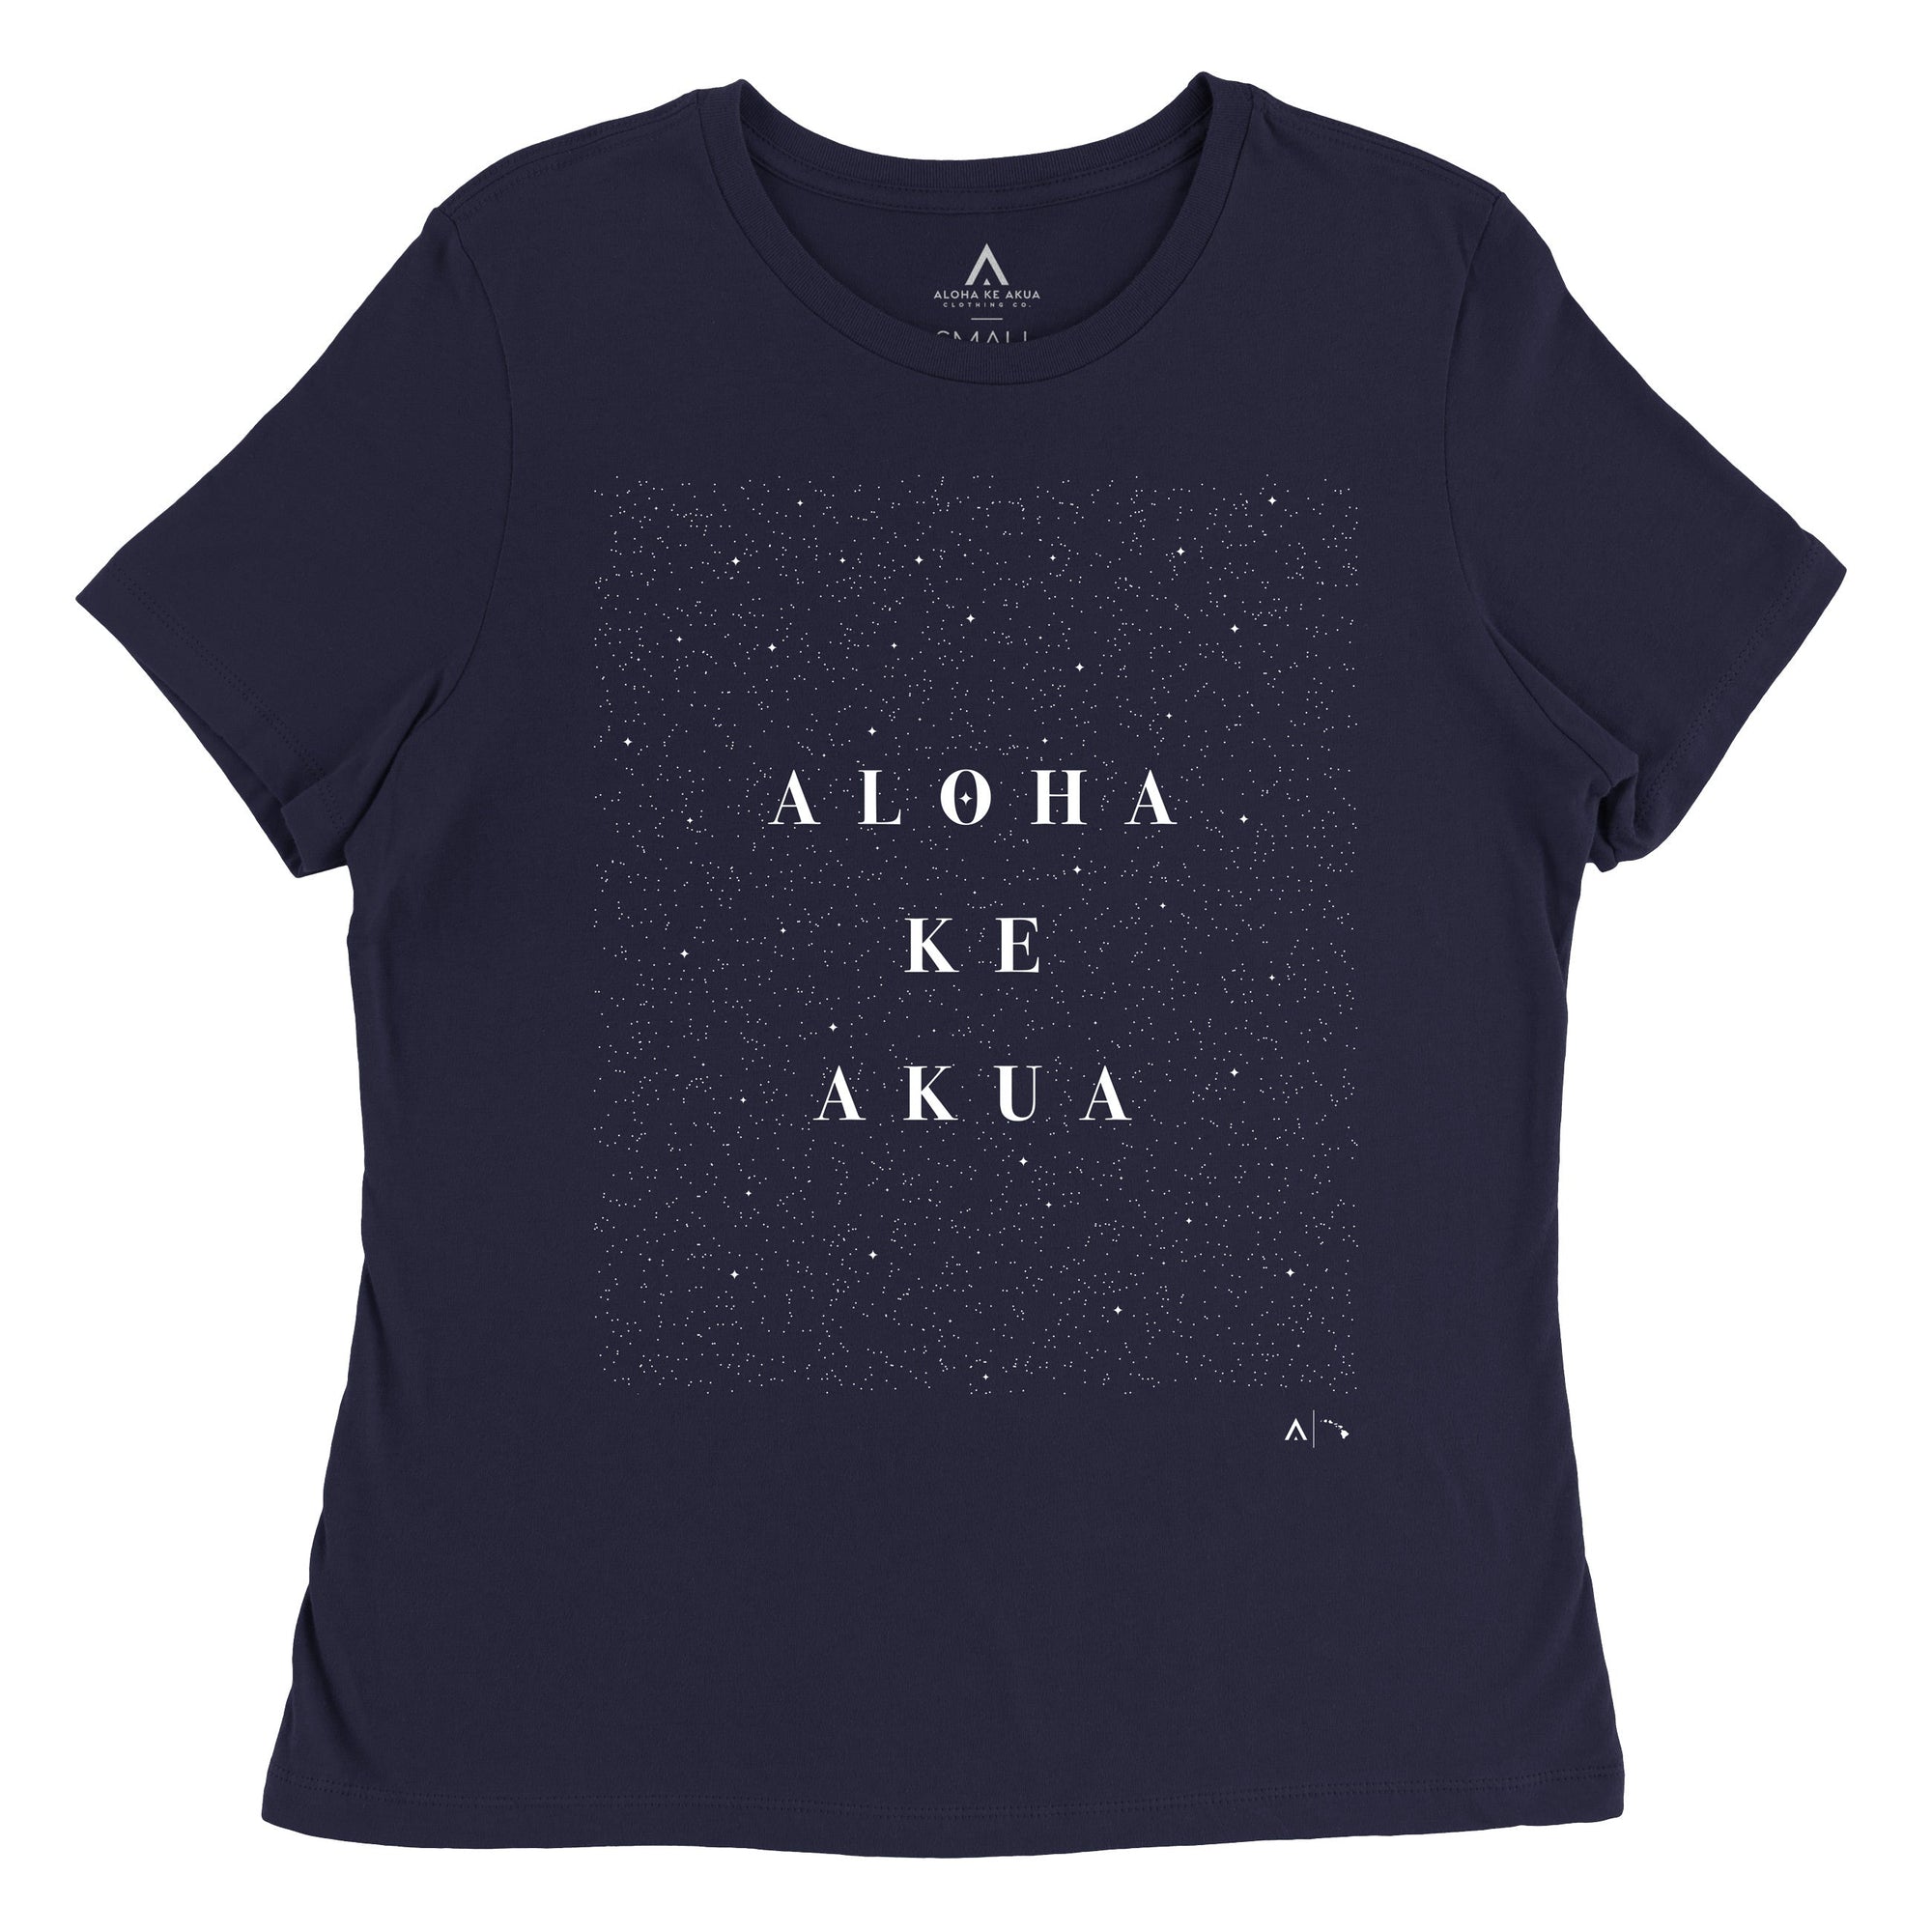 Pop-Up Mākeke - Aloha Ke Akua Clothing - Nāhōkū Women's Short Sleeve T-Shirt - Midnight Navy - Front View